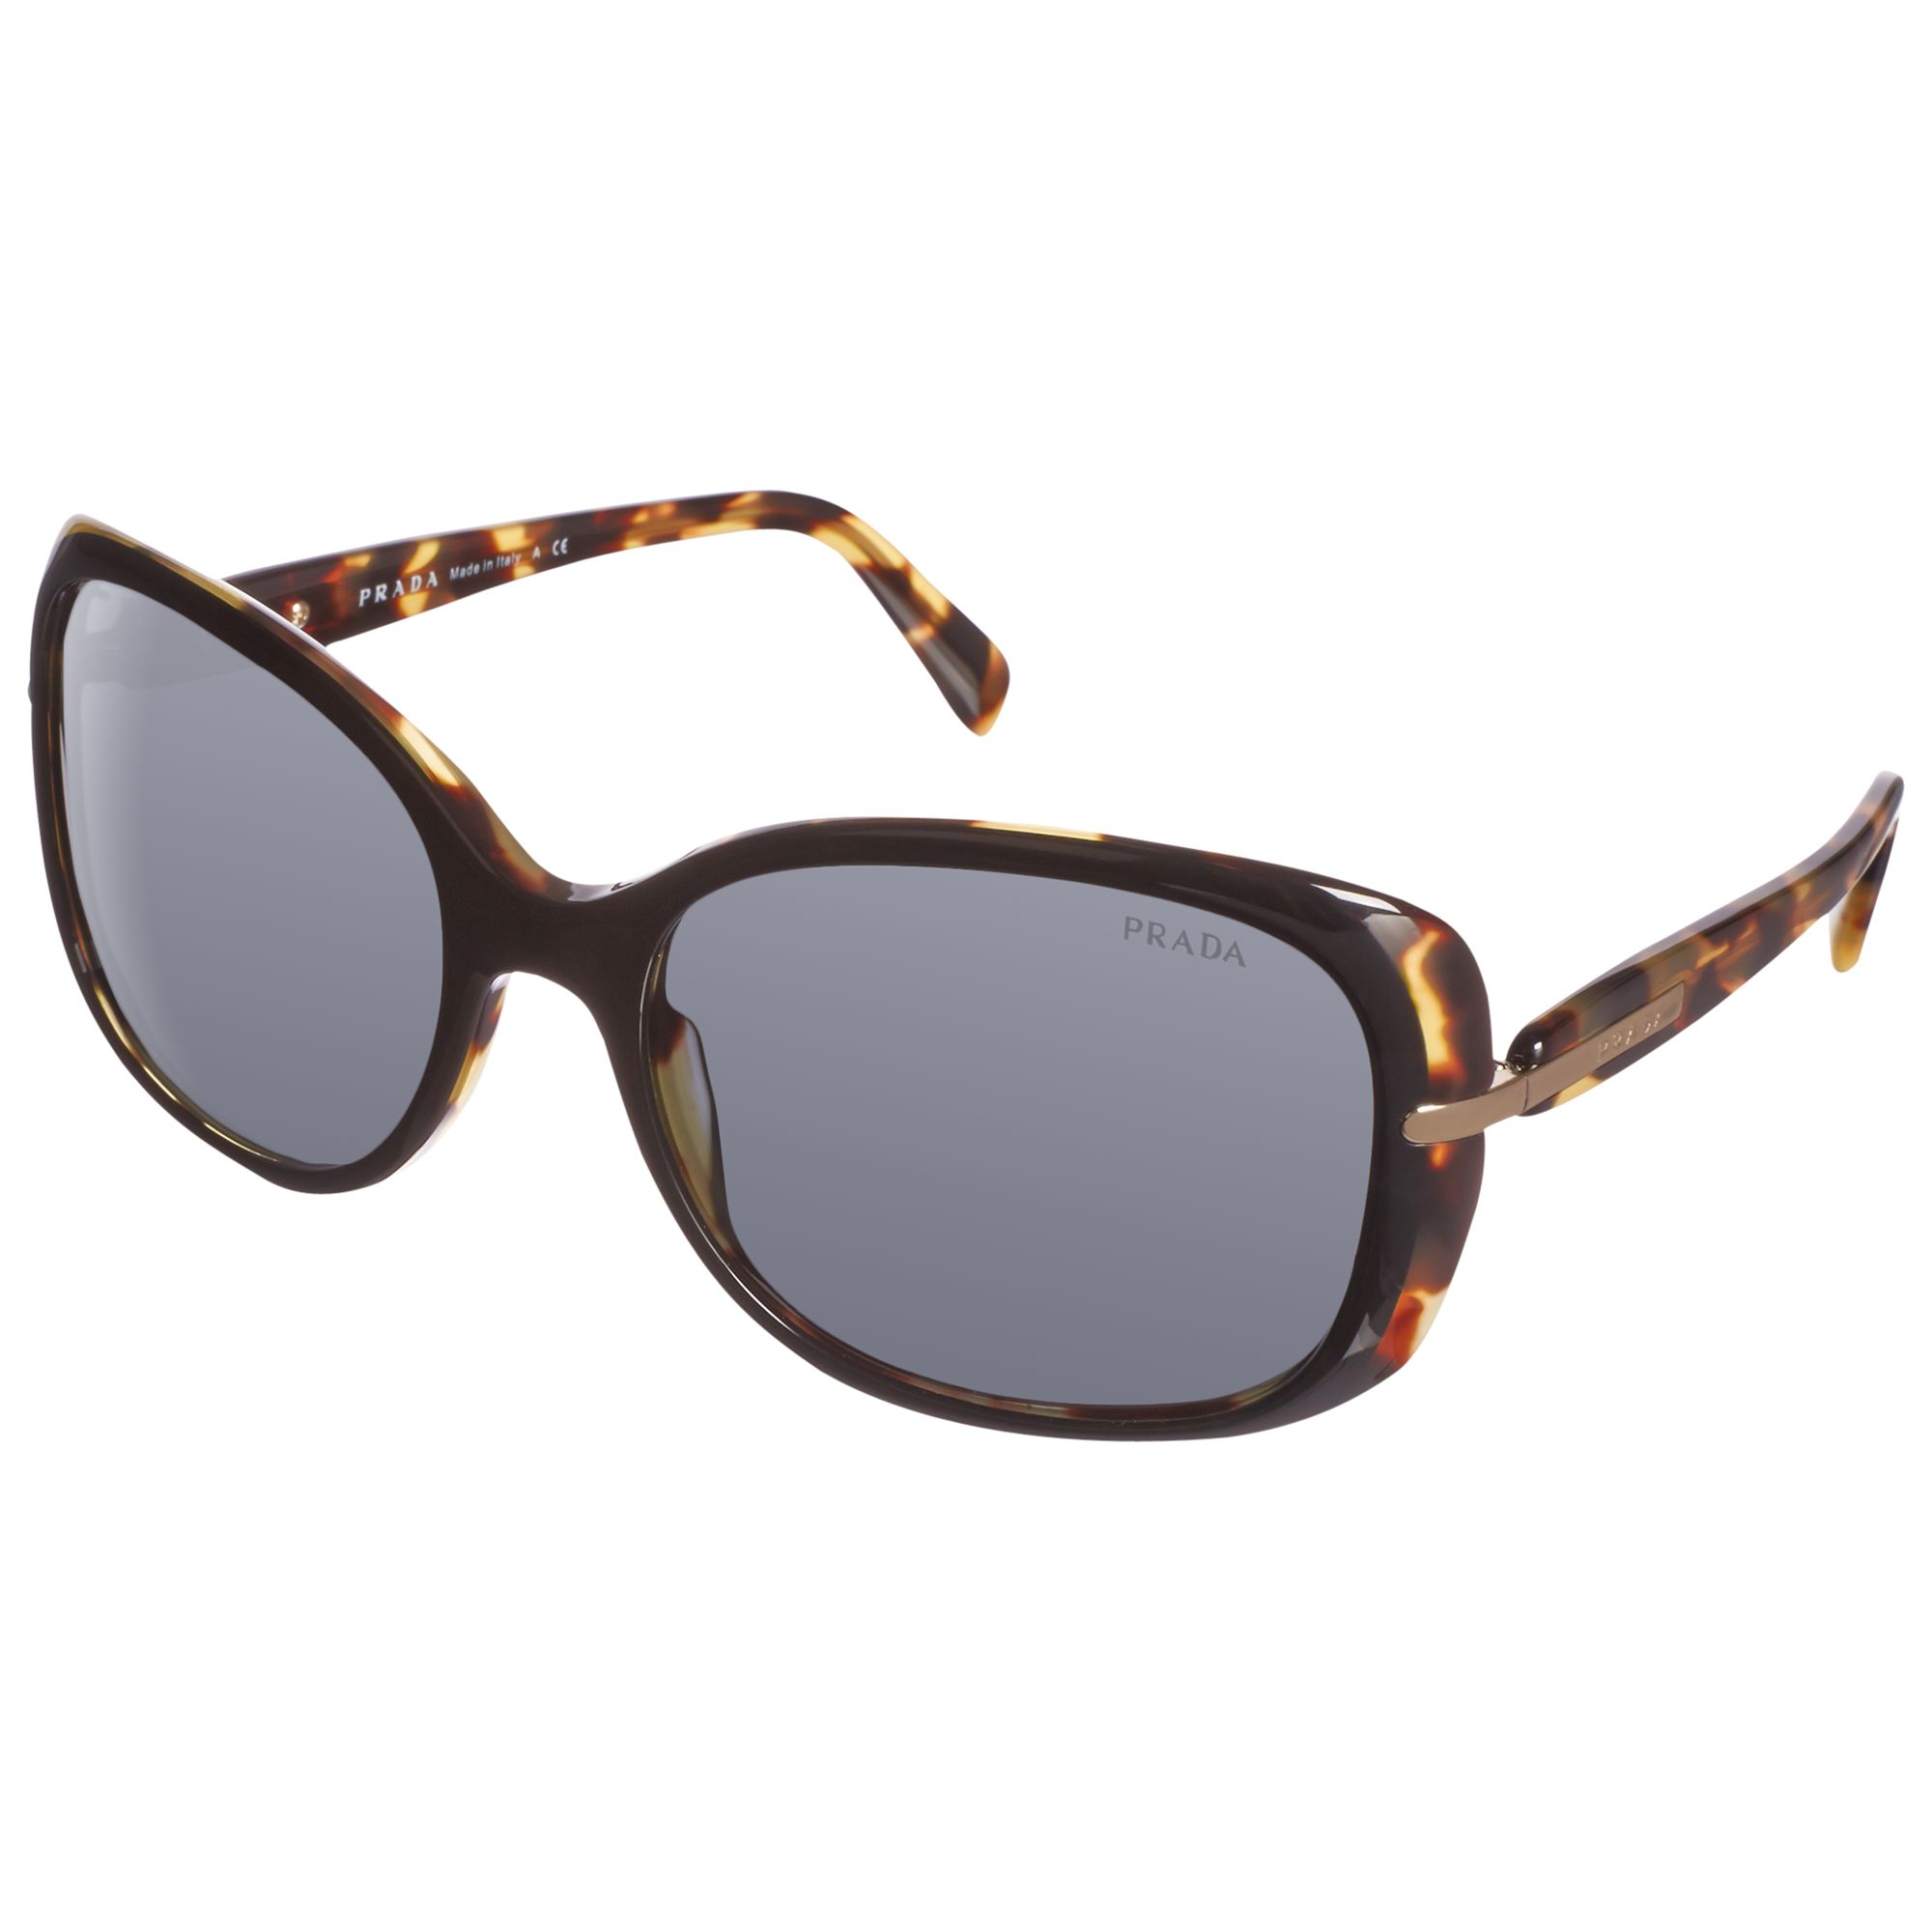 prada sunglasses pr080s, OFF 77%,Buy!